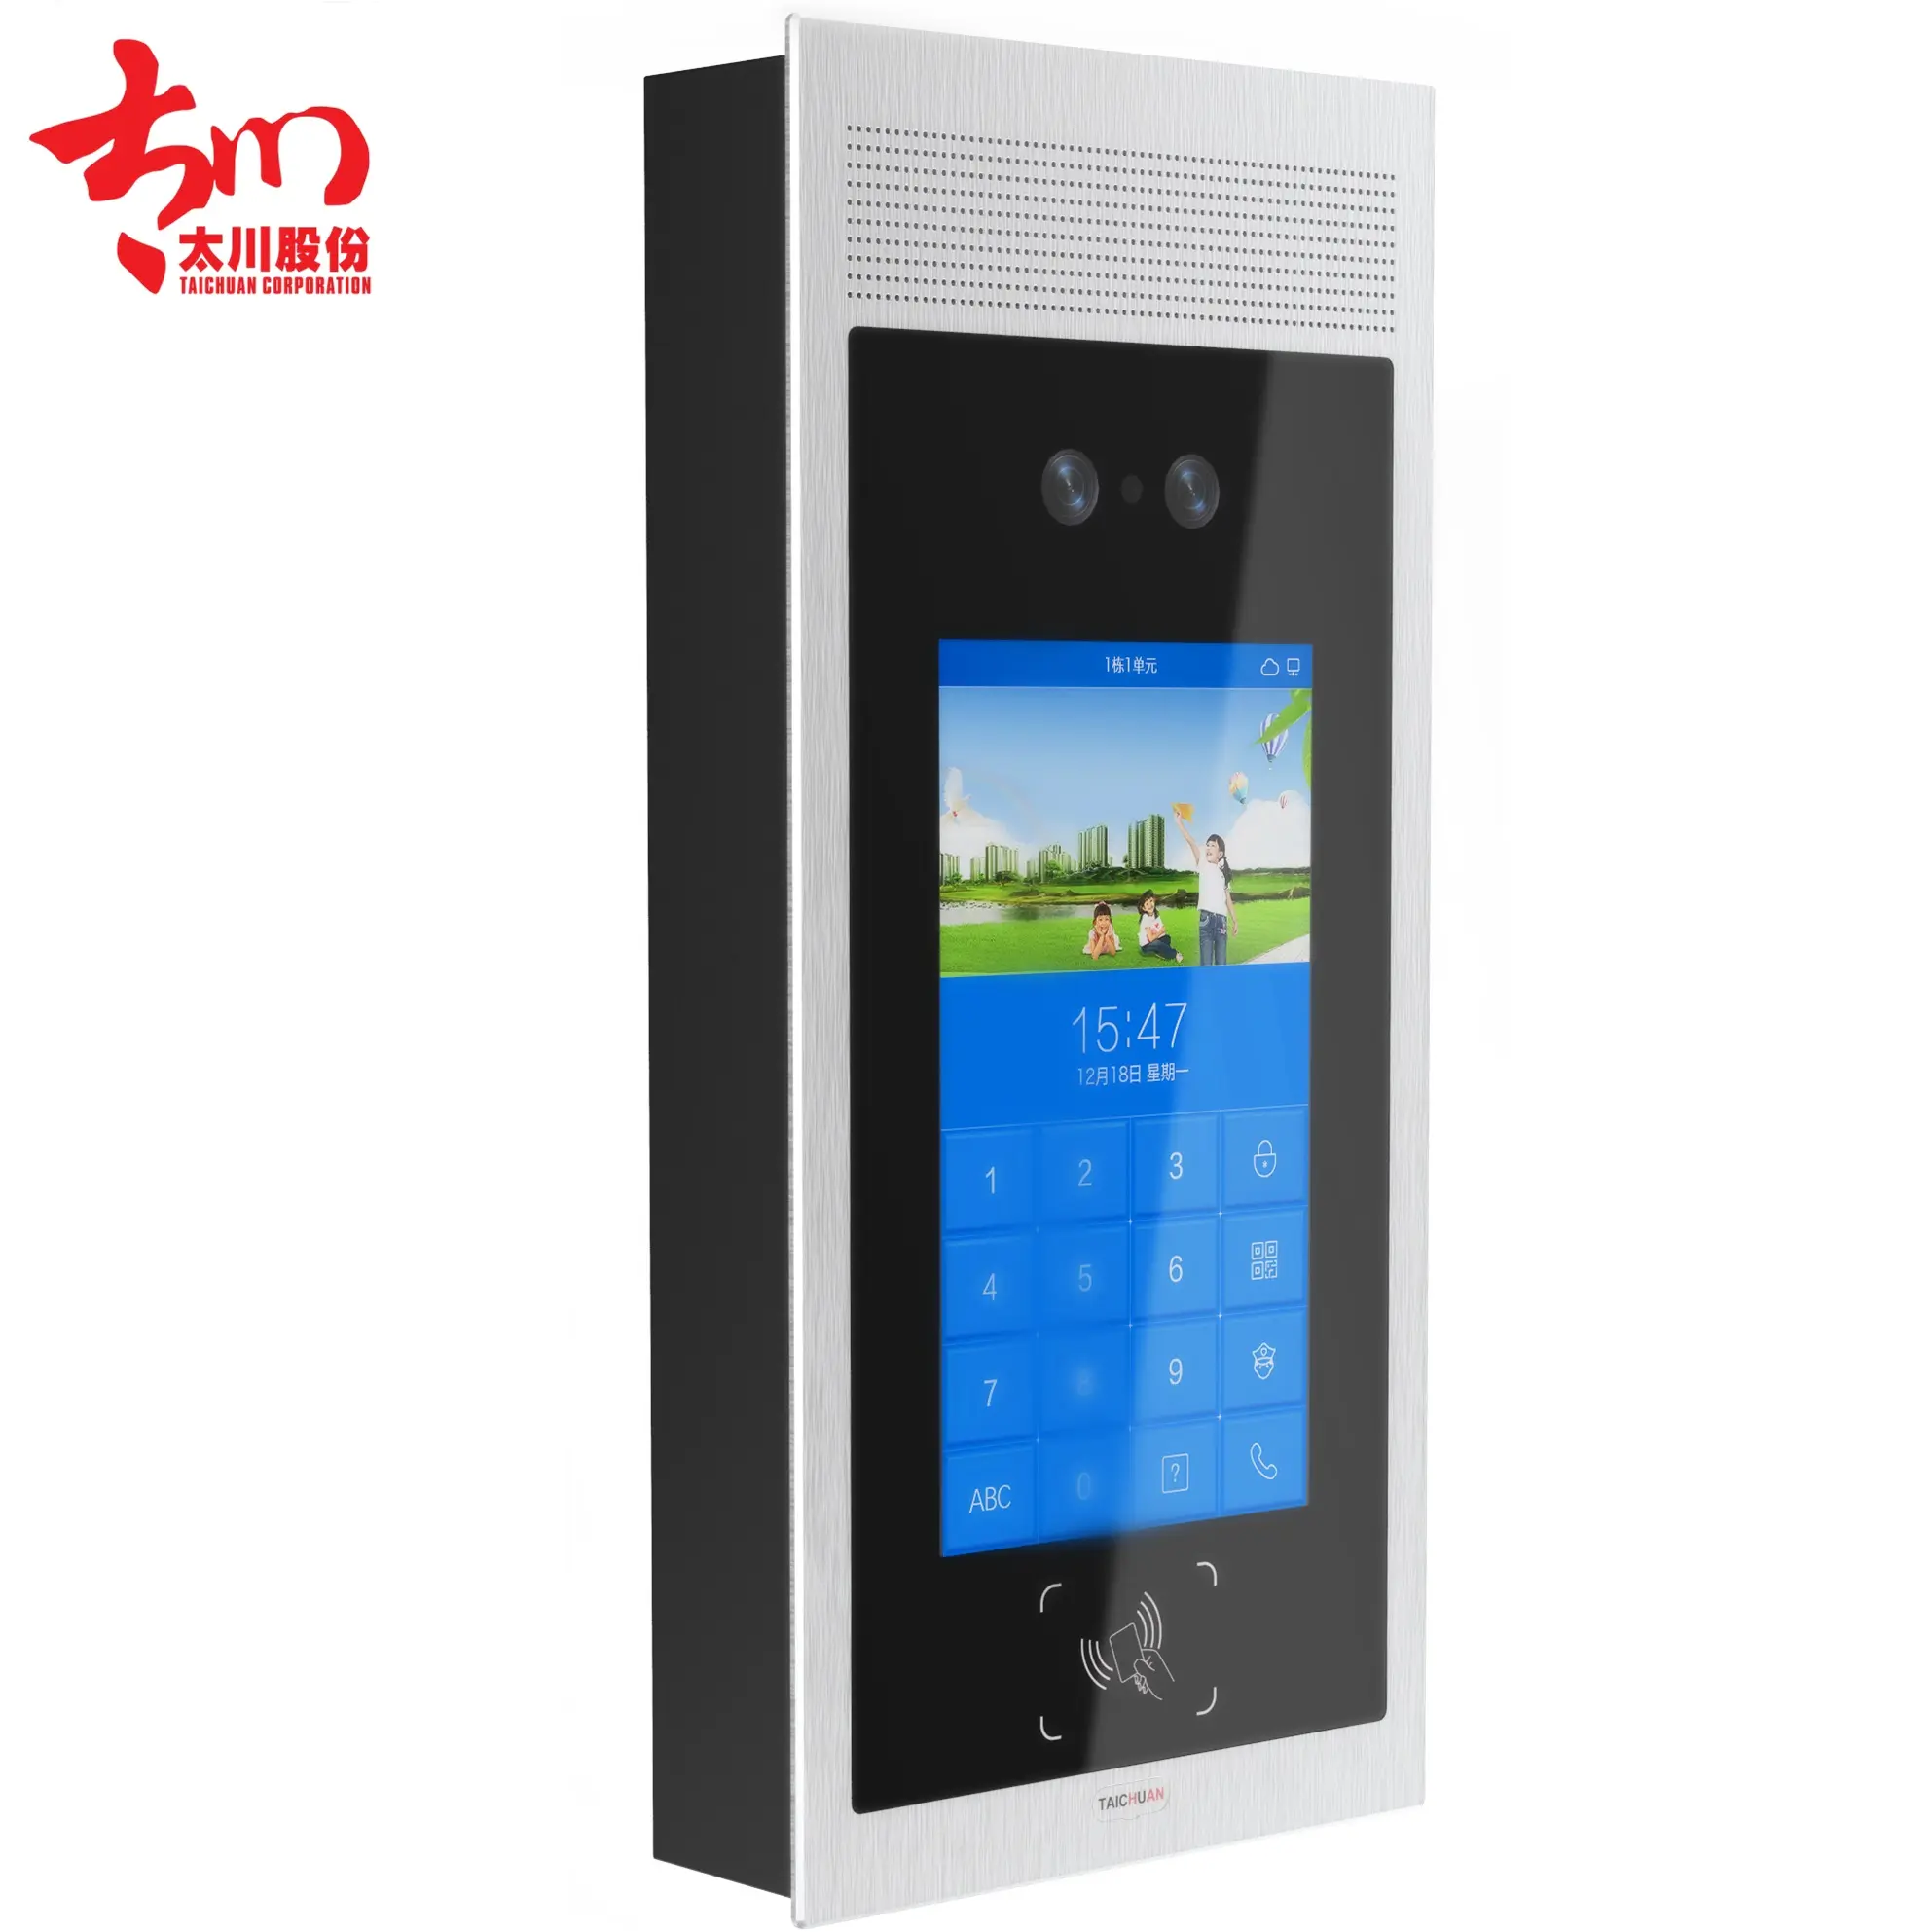 Taichuan Video kapı zili WIFI 1080P HD açık telefon kapı zili kamera güvenlik Video interkom IR gece görüş AC USB güç akıllı H